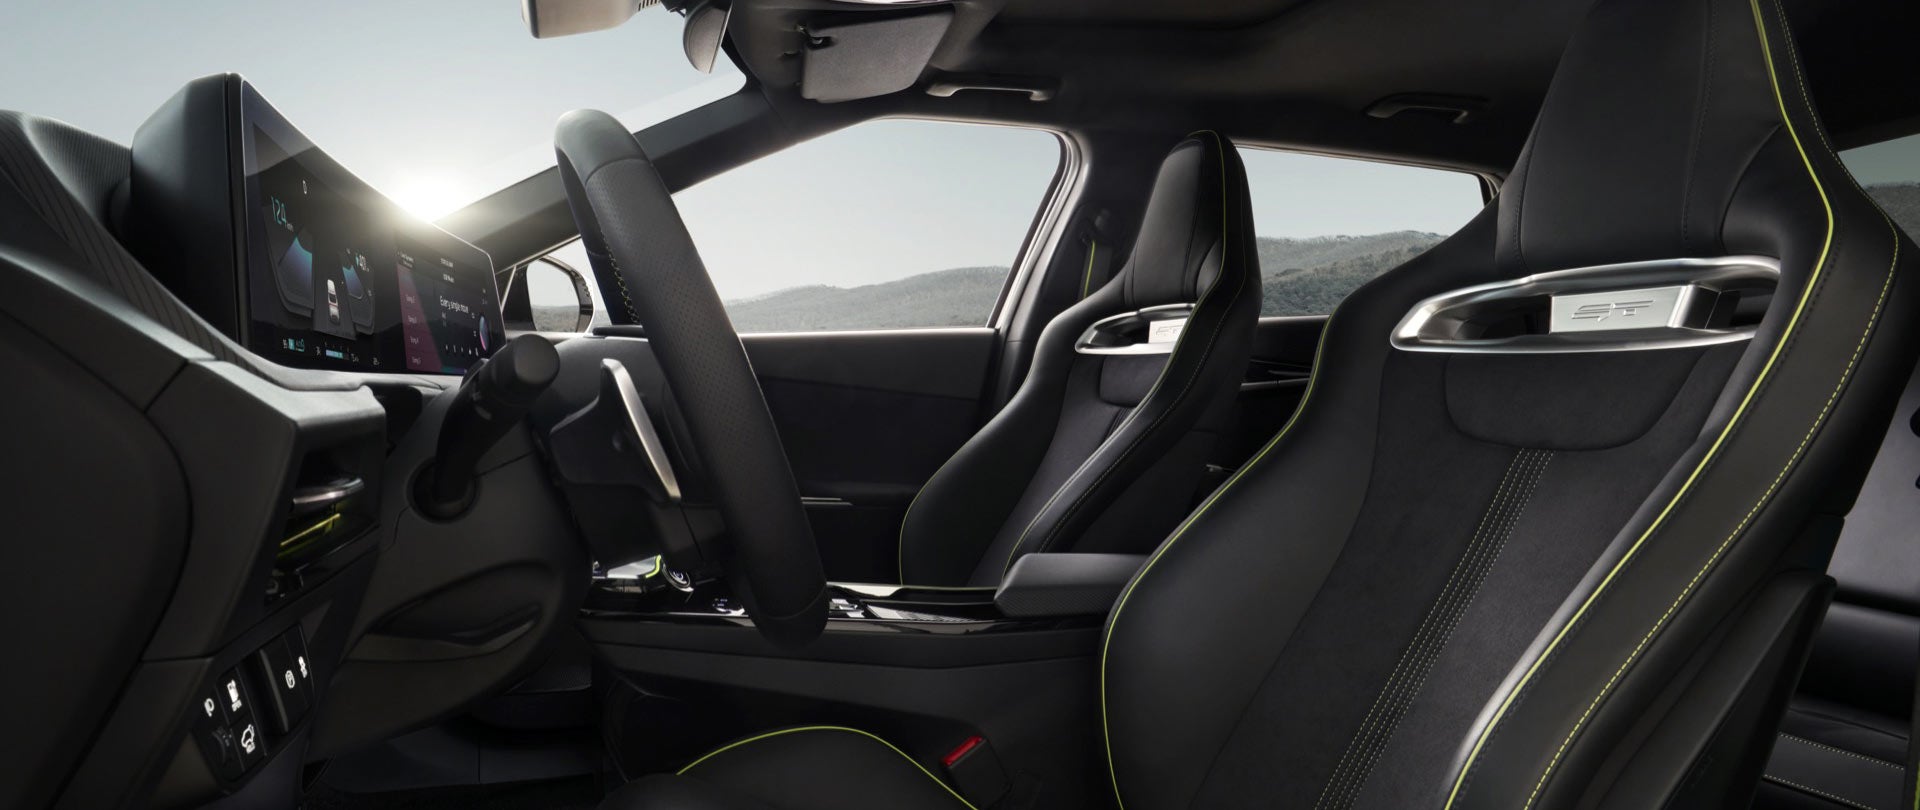 2022 Kia EV6 Sustainability Built Right In Image | Kia Of Muncie in Muncie IN